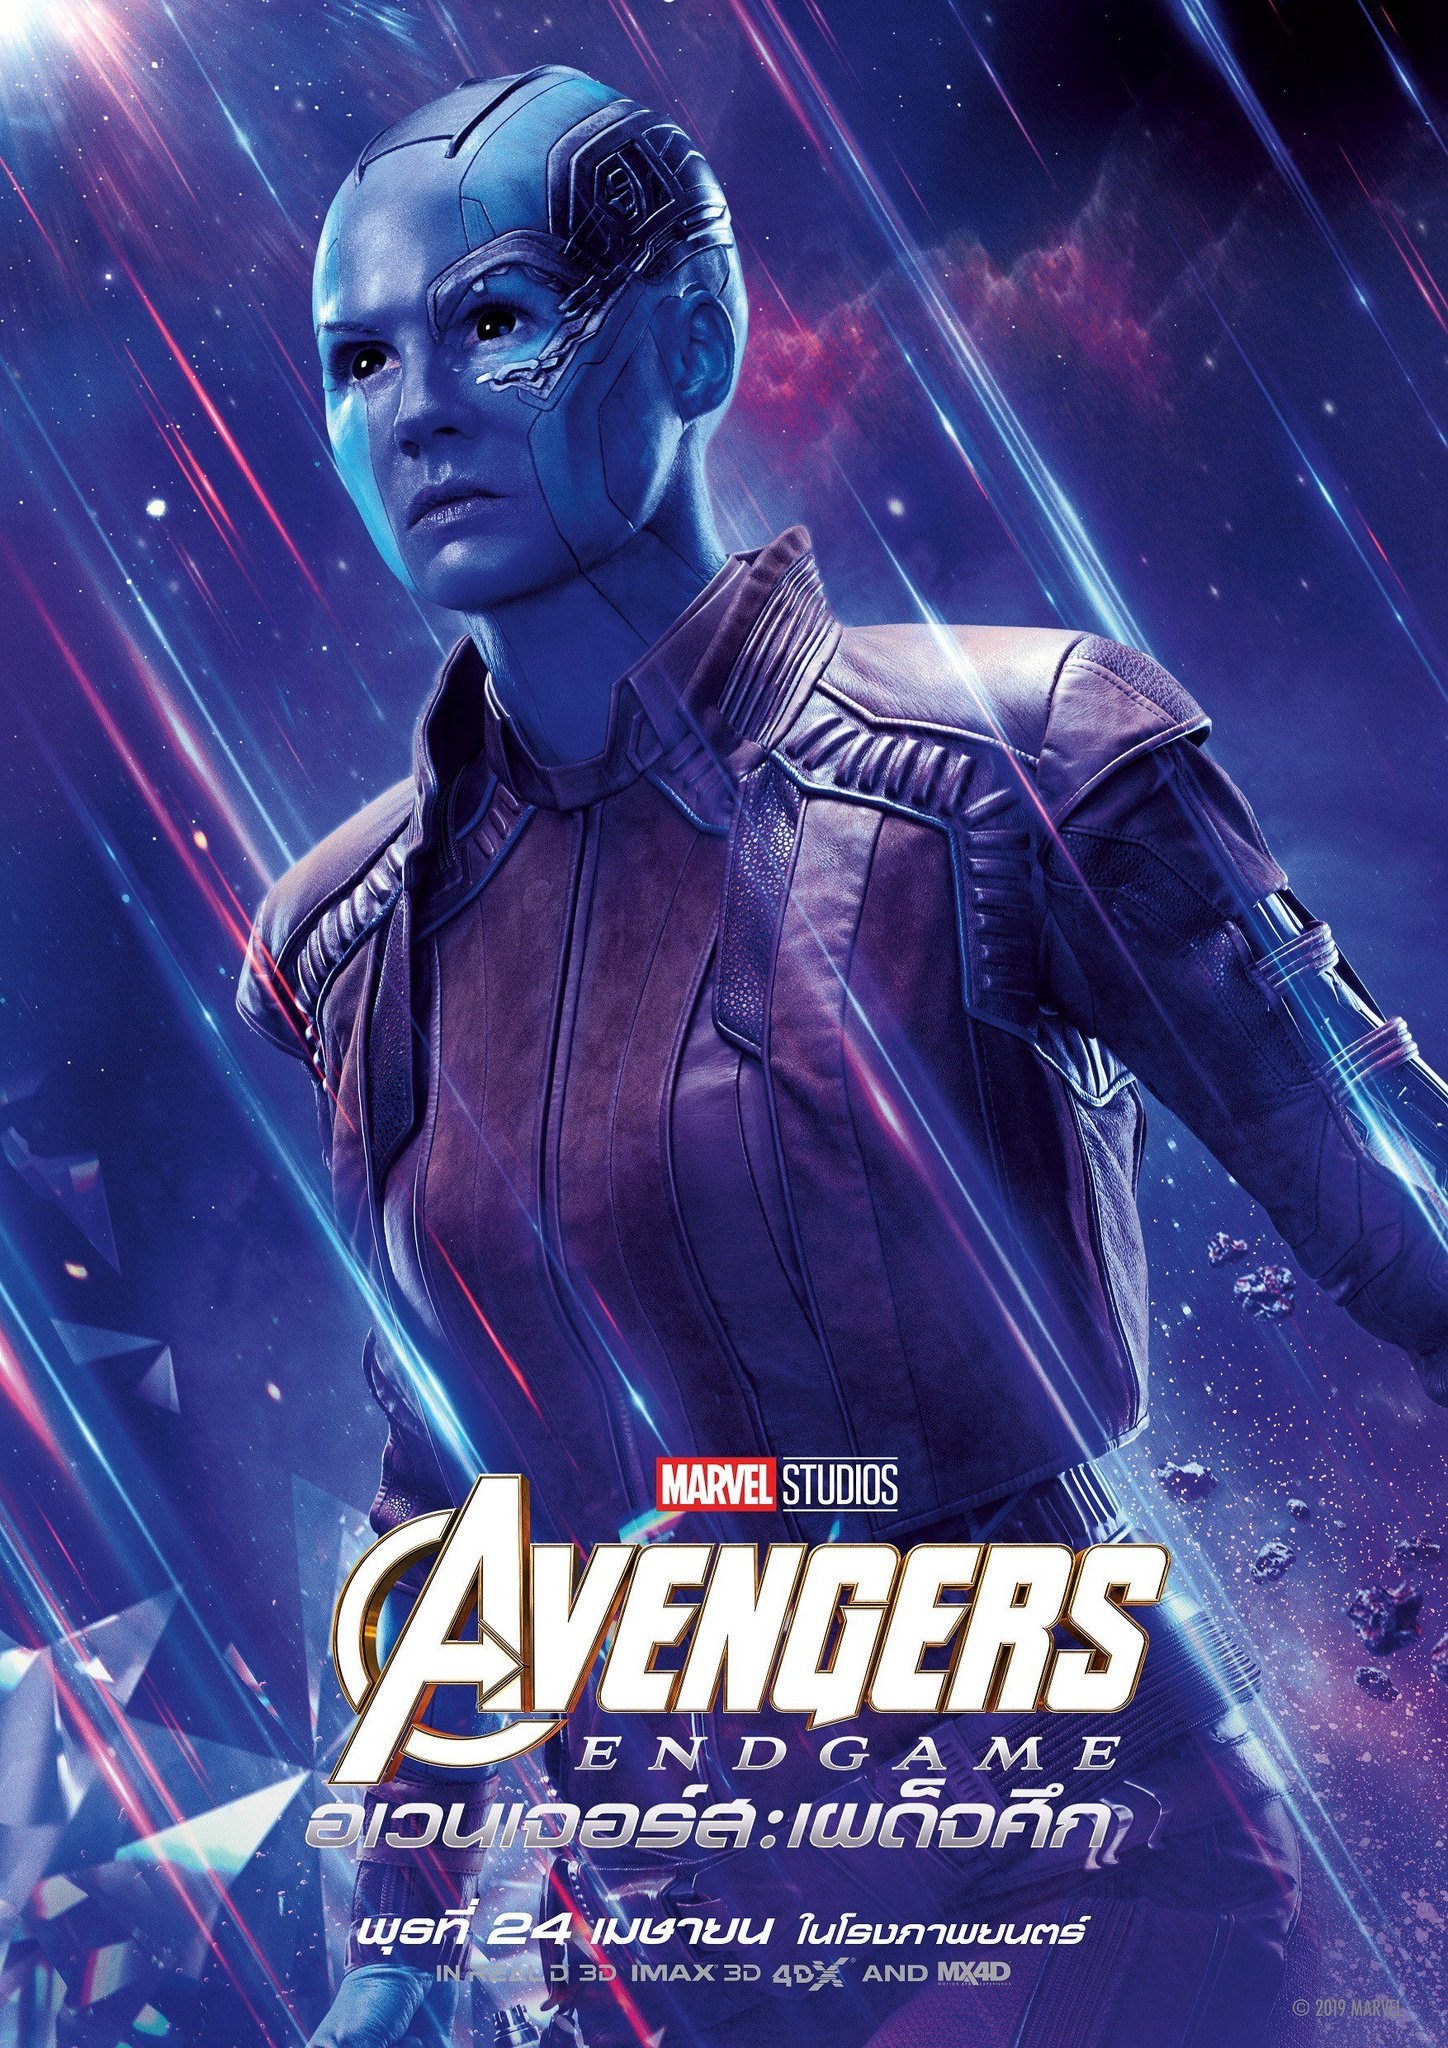 1080x1920 Avengers Infinity War Movie Bill Poster Iphone 7,6s,6 Plus, Pixel xl ,One Plus 3,3t,5 ...